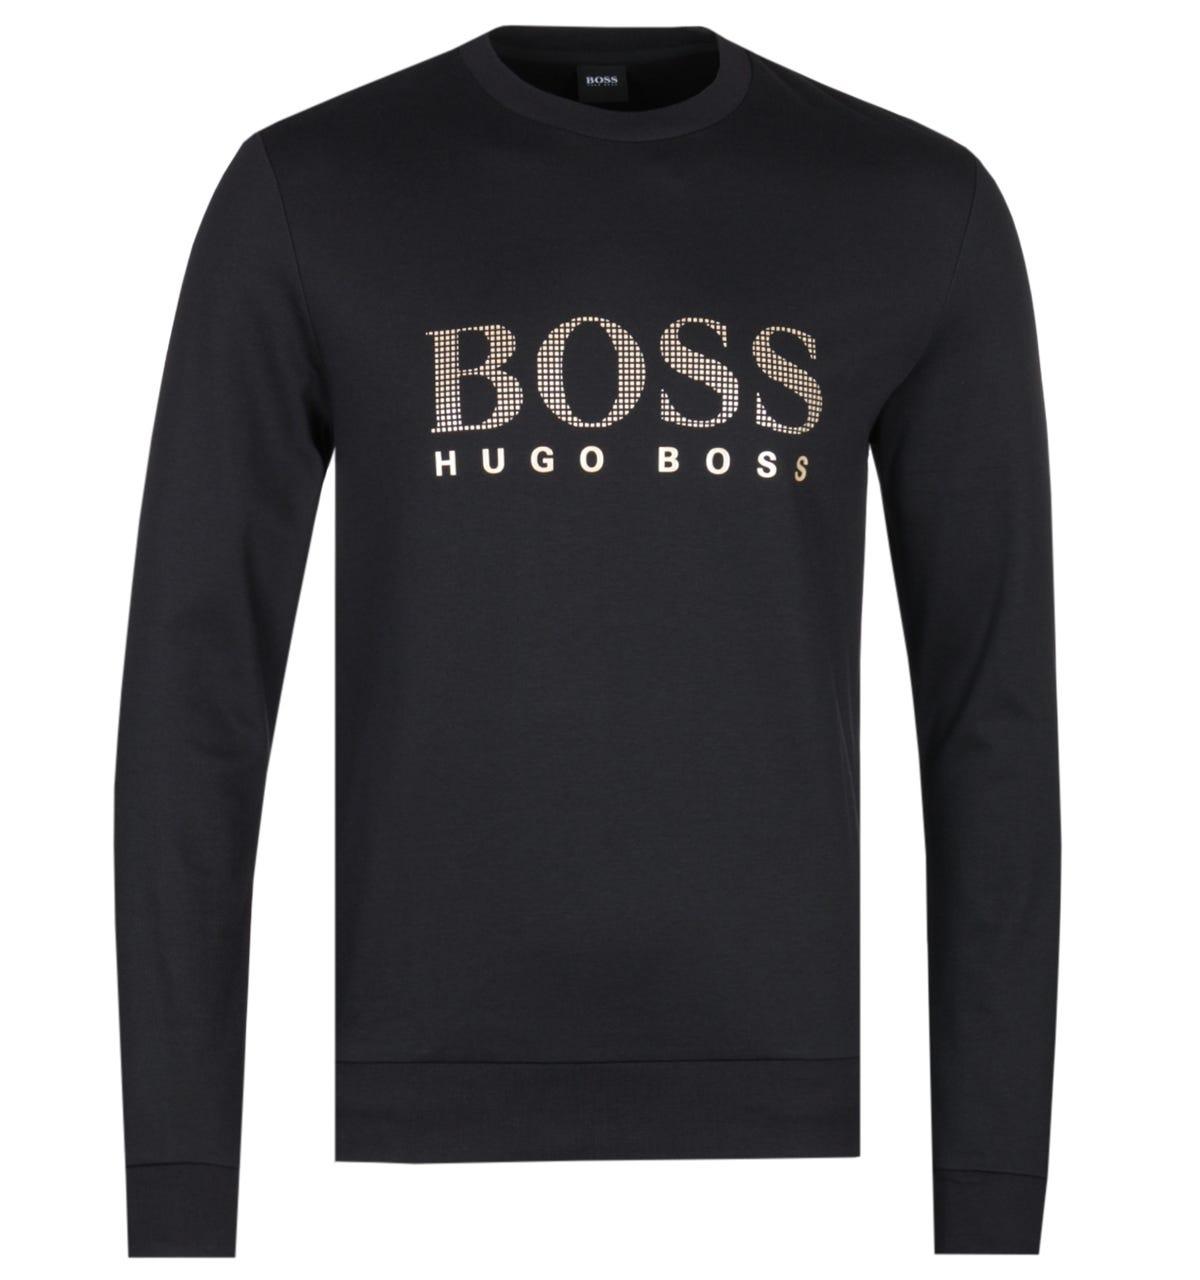 BOSS by Hugo Boss Cotton Authentic Black & Gold Crew Neck Logo ...